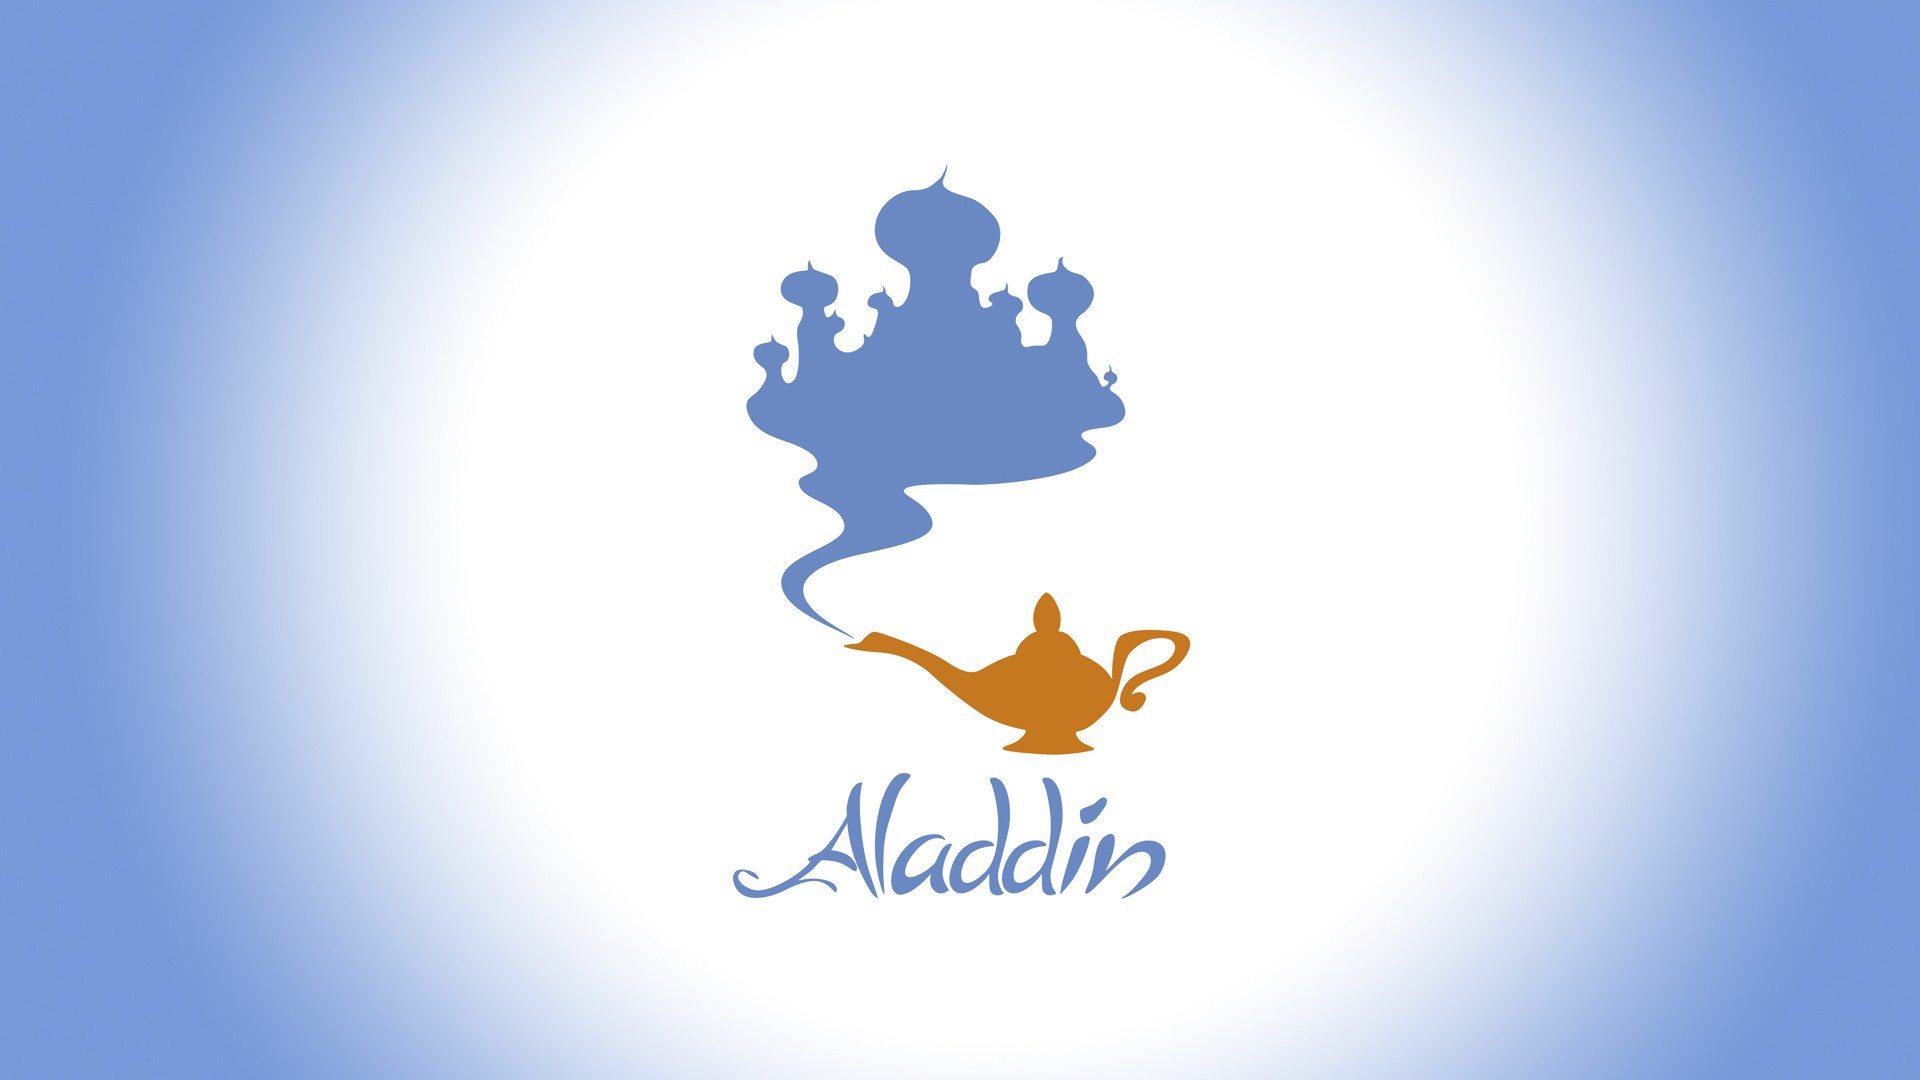 Aladdin free downloads